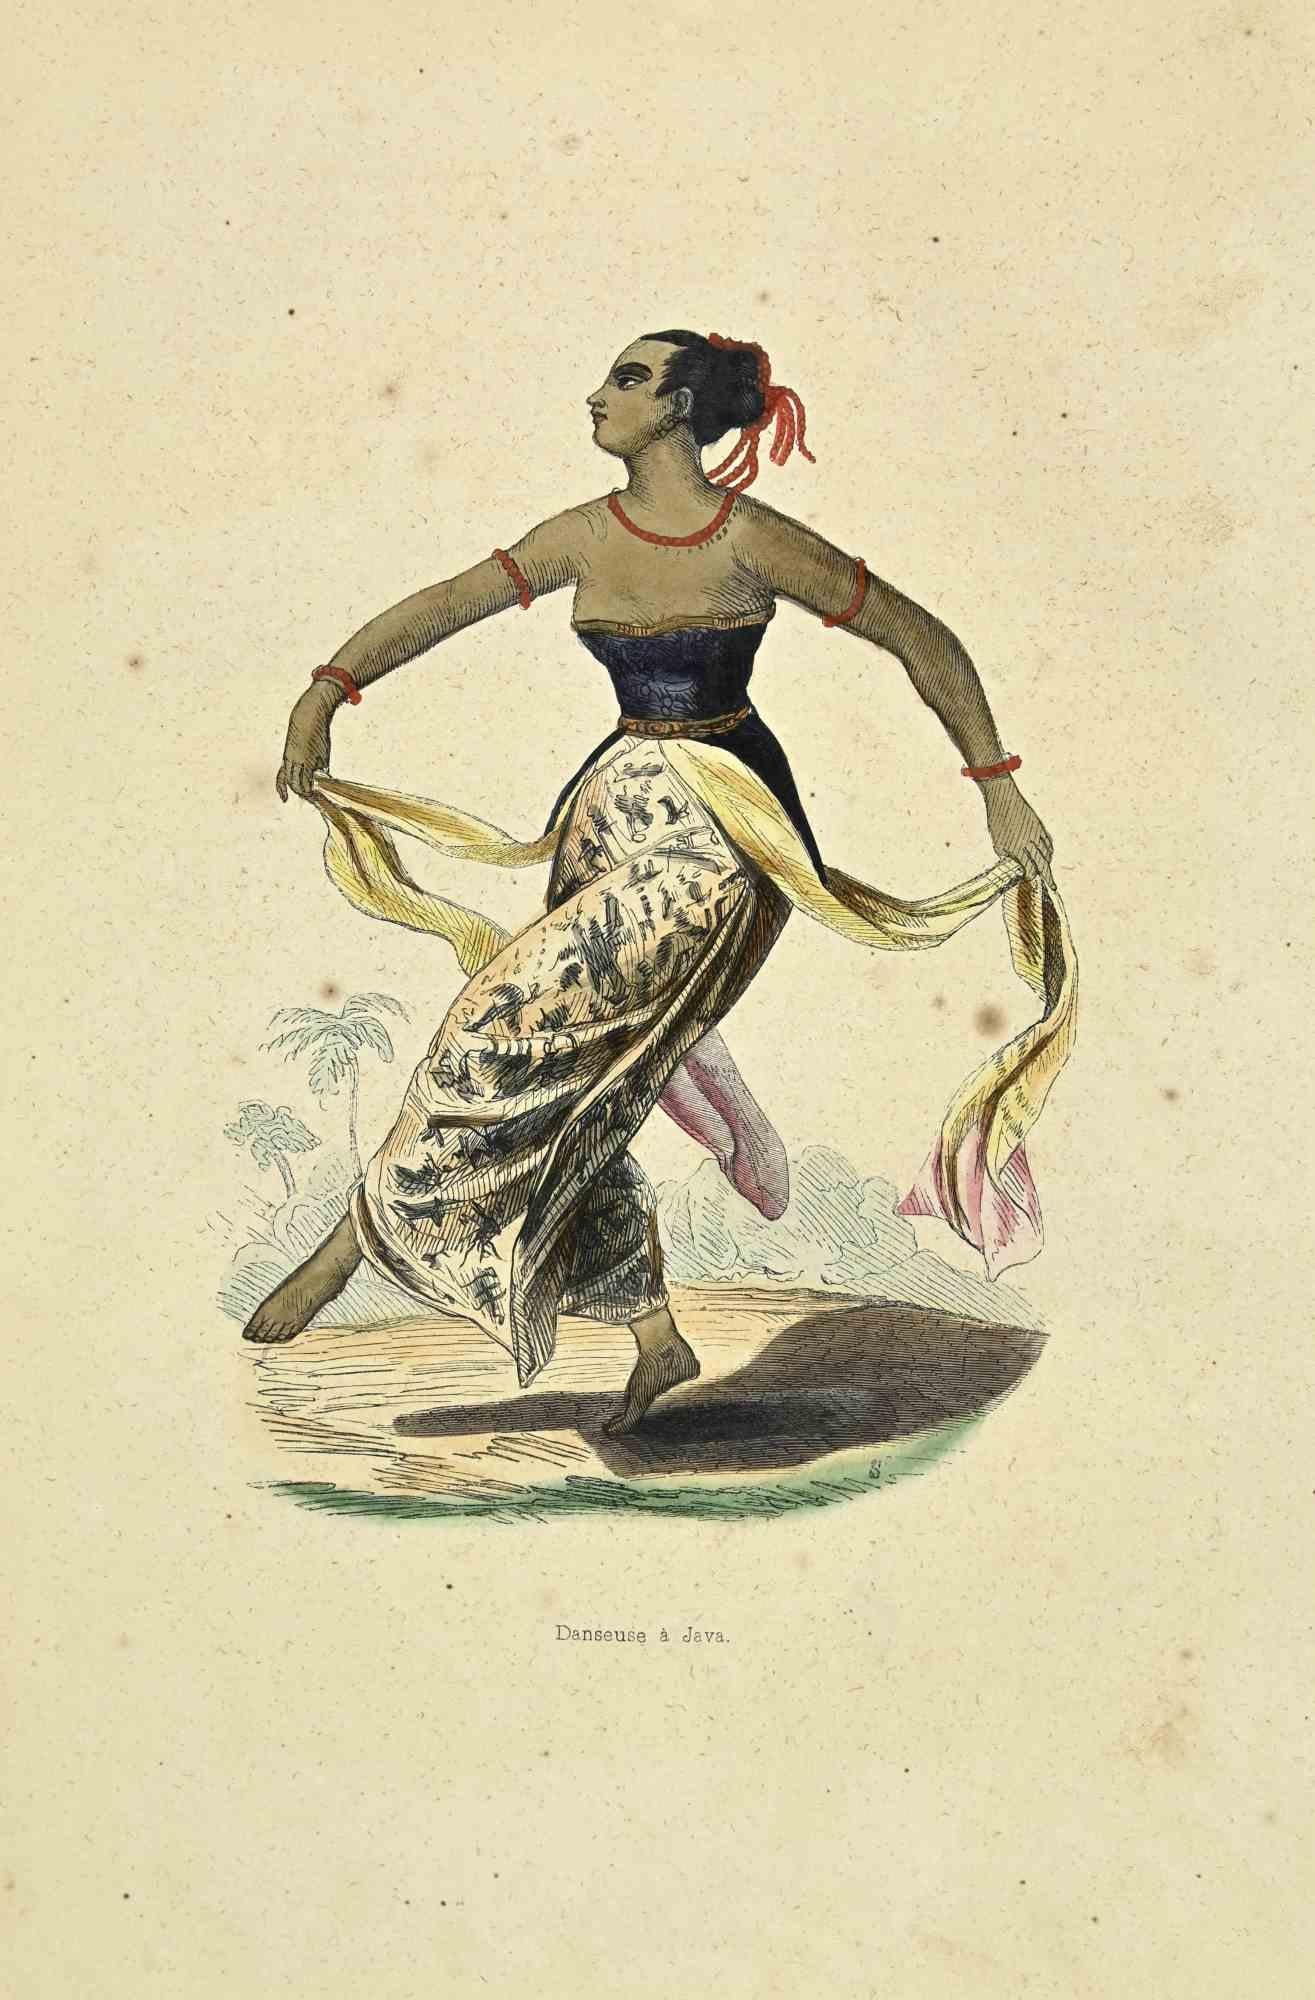 Danseuse a Java - Lithograph by Auguste Wahlen - 1844